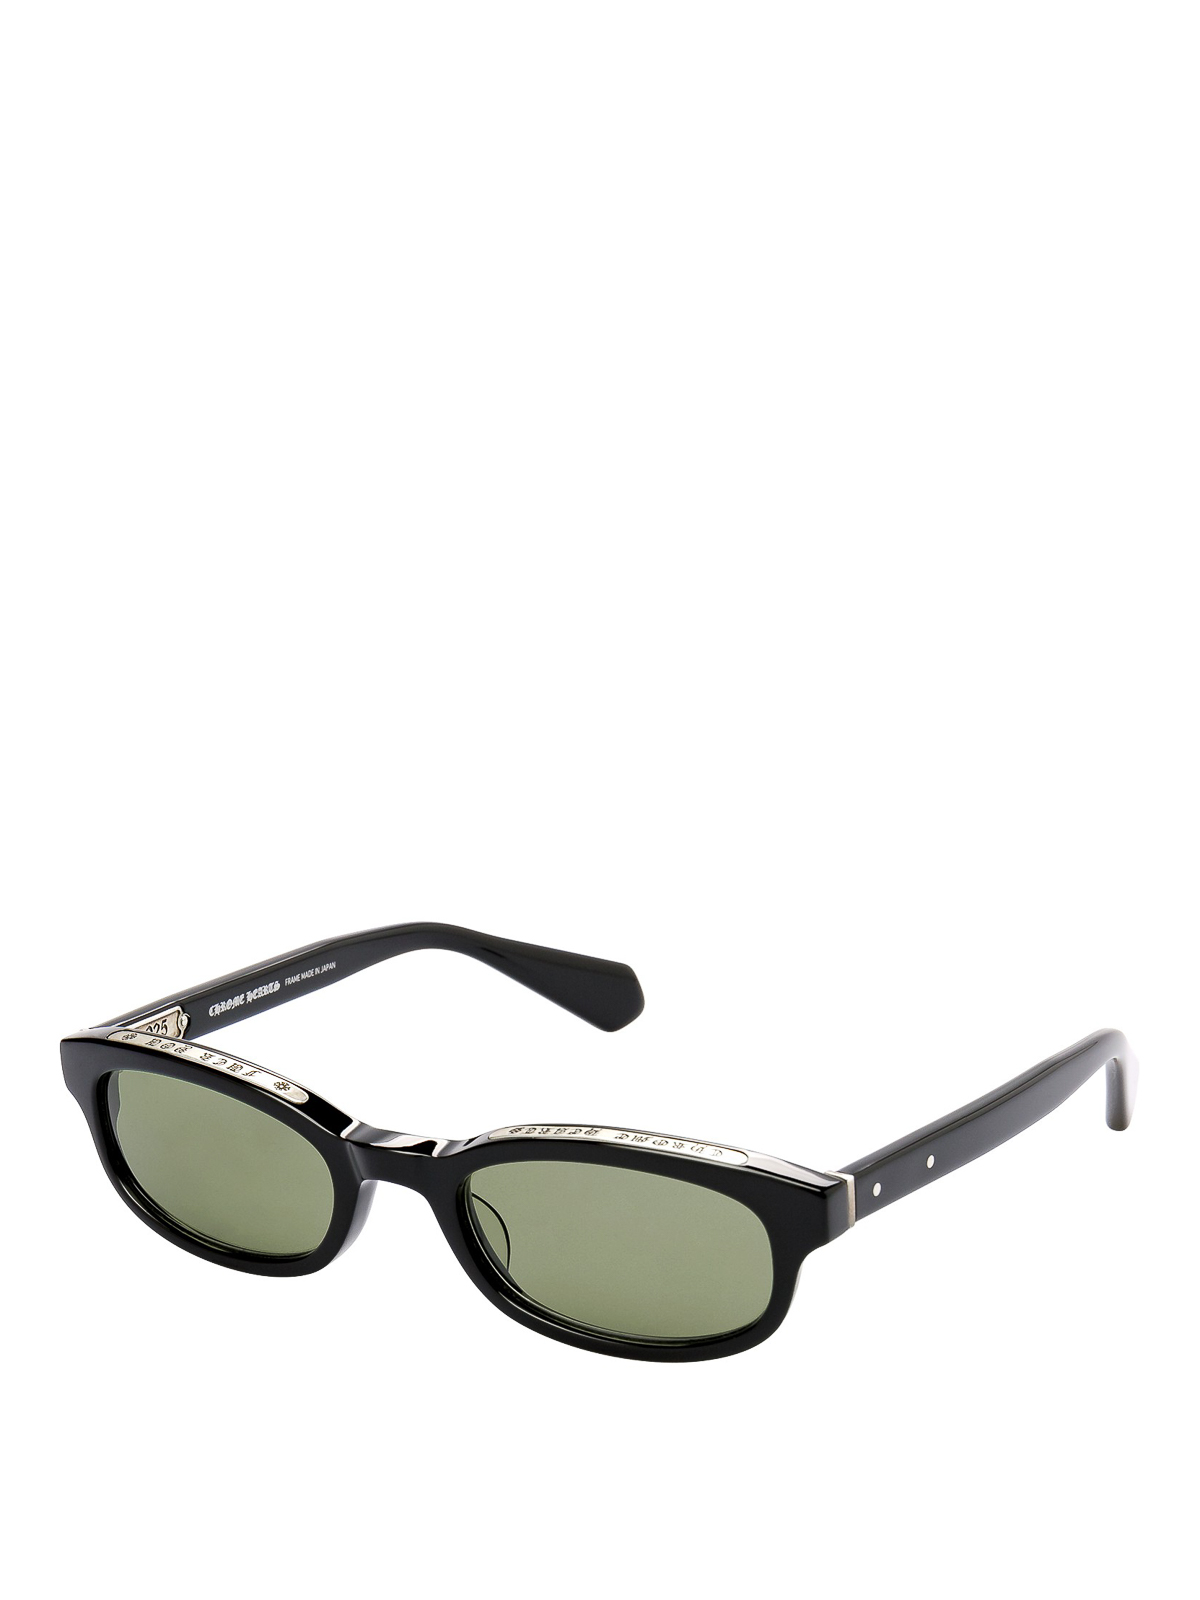 Sunglasses Chrome Hearts - Lowrider sunglasses - LOWRIDERBKPG